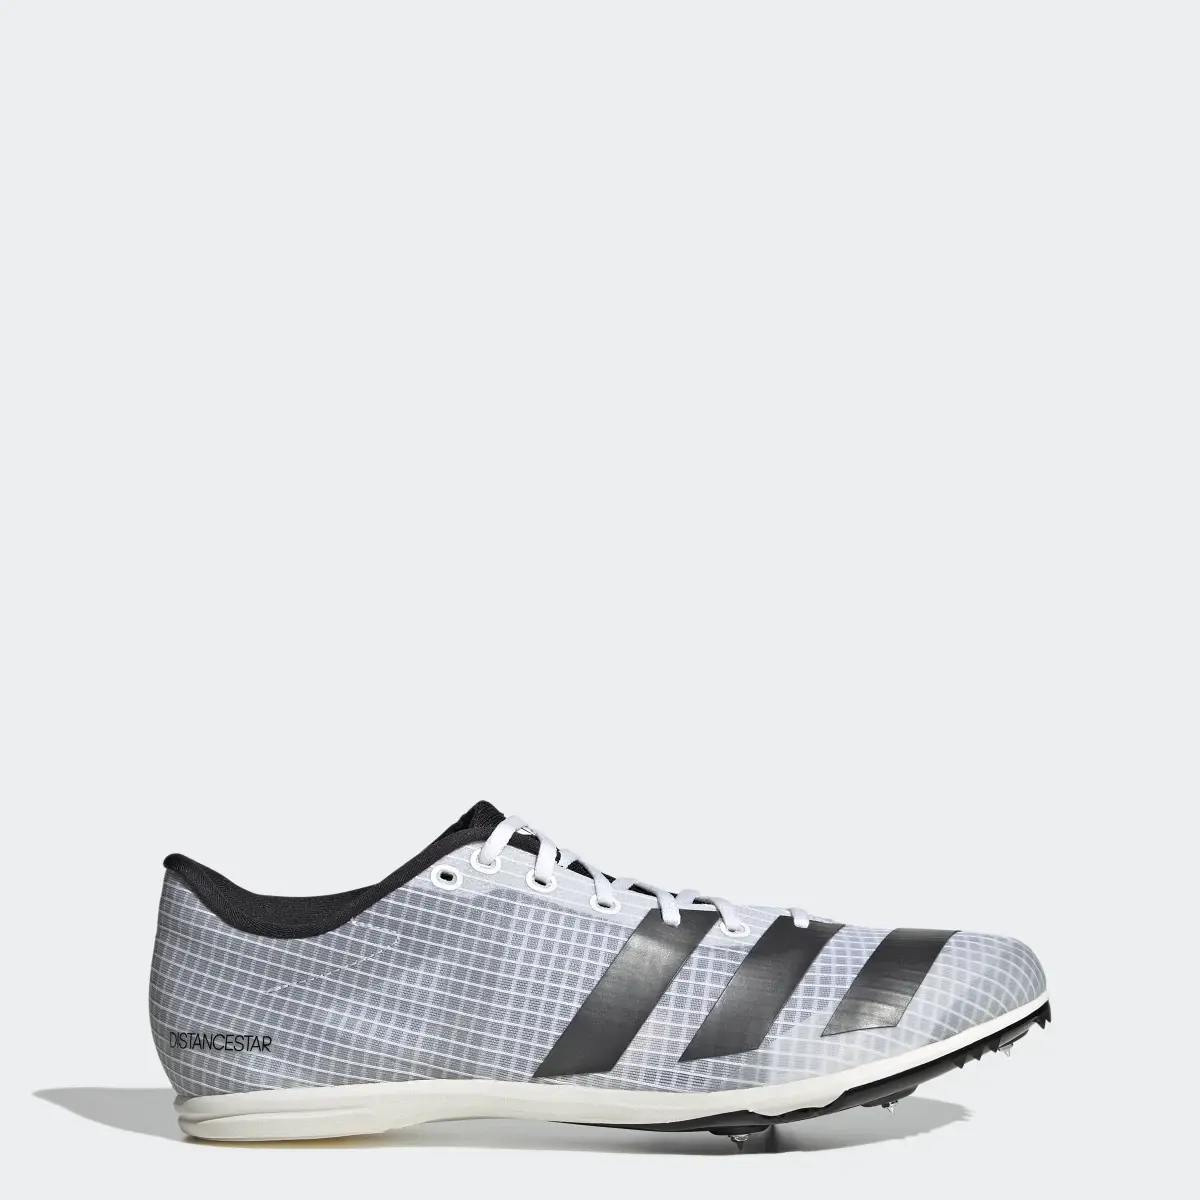 Adidas DistanceStar Spike-Schuh. 1